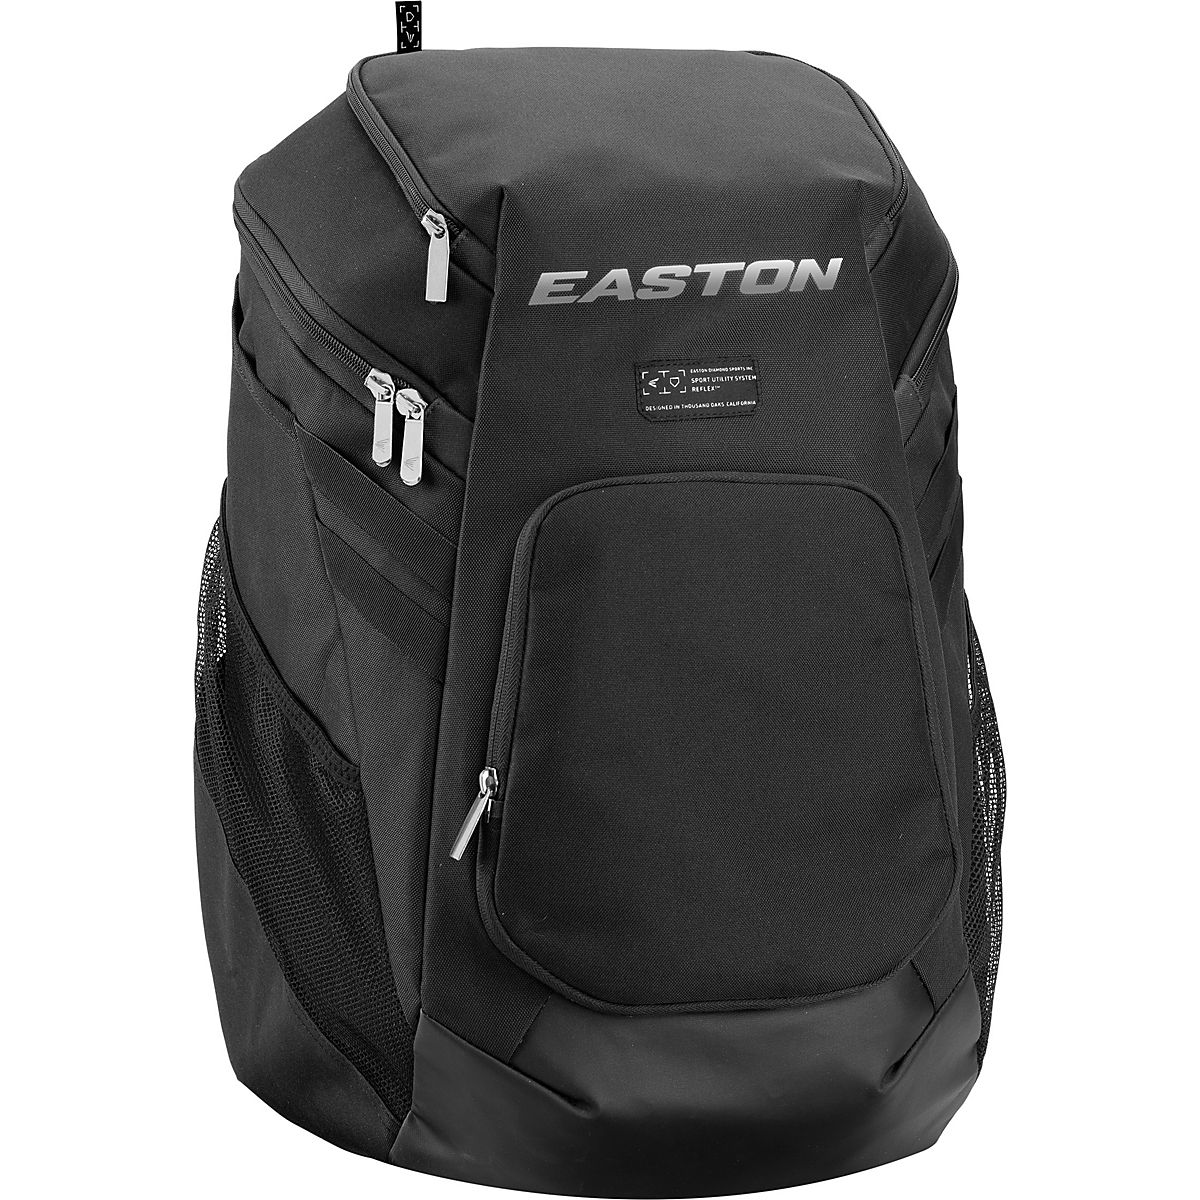 EASTON Reflex Baseball Backpack | Free Shipping at Academy